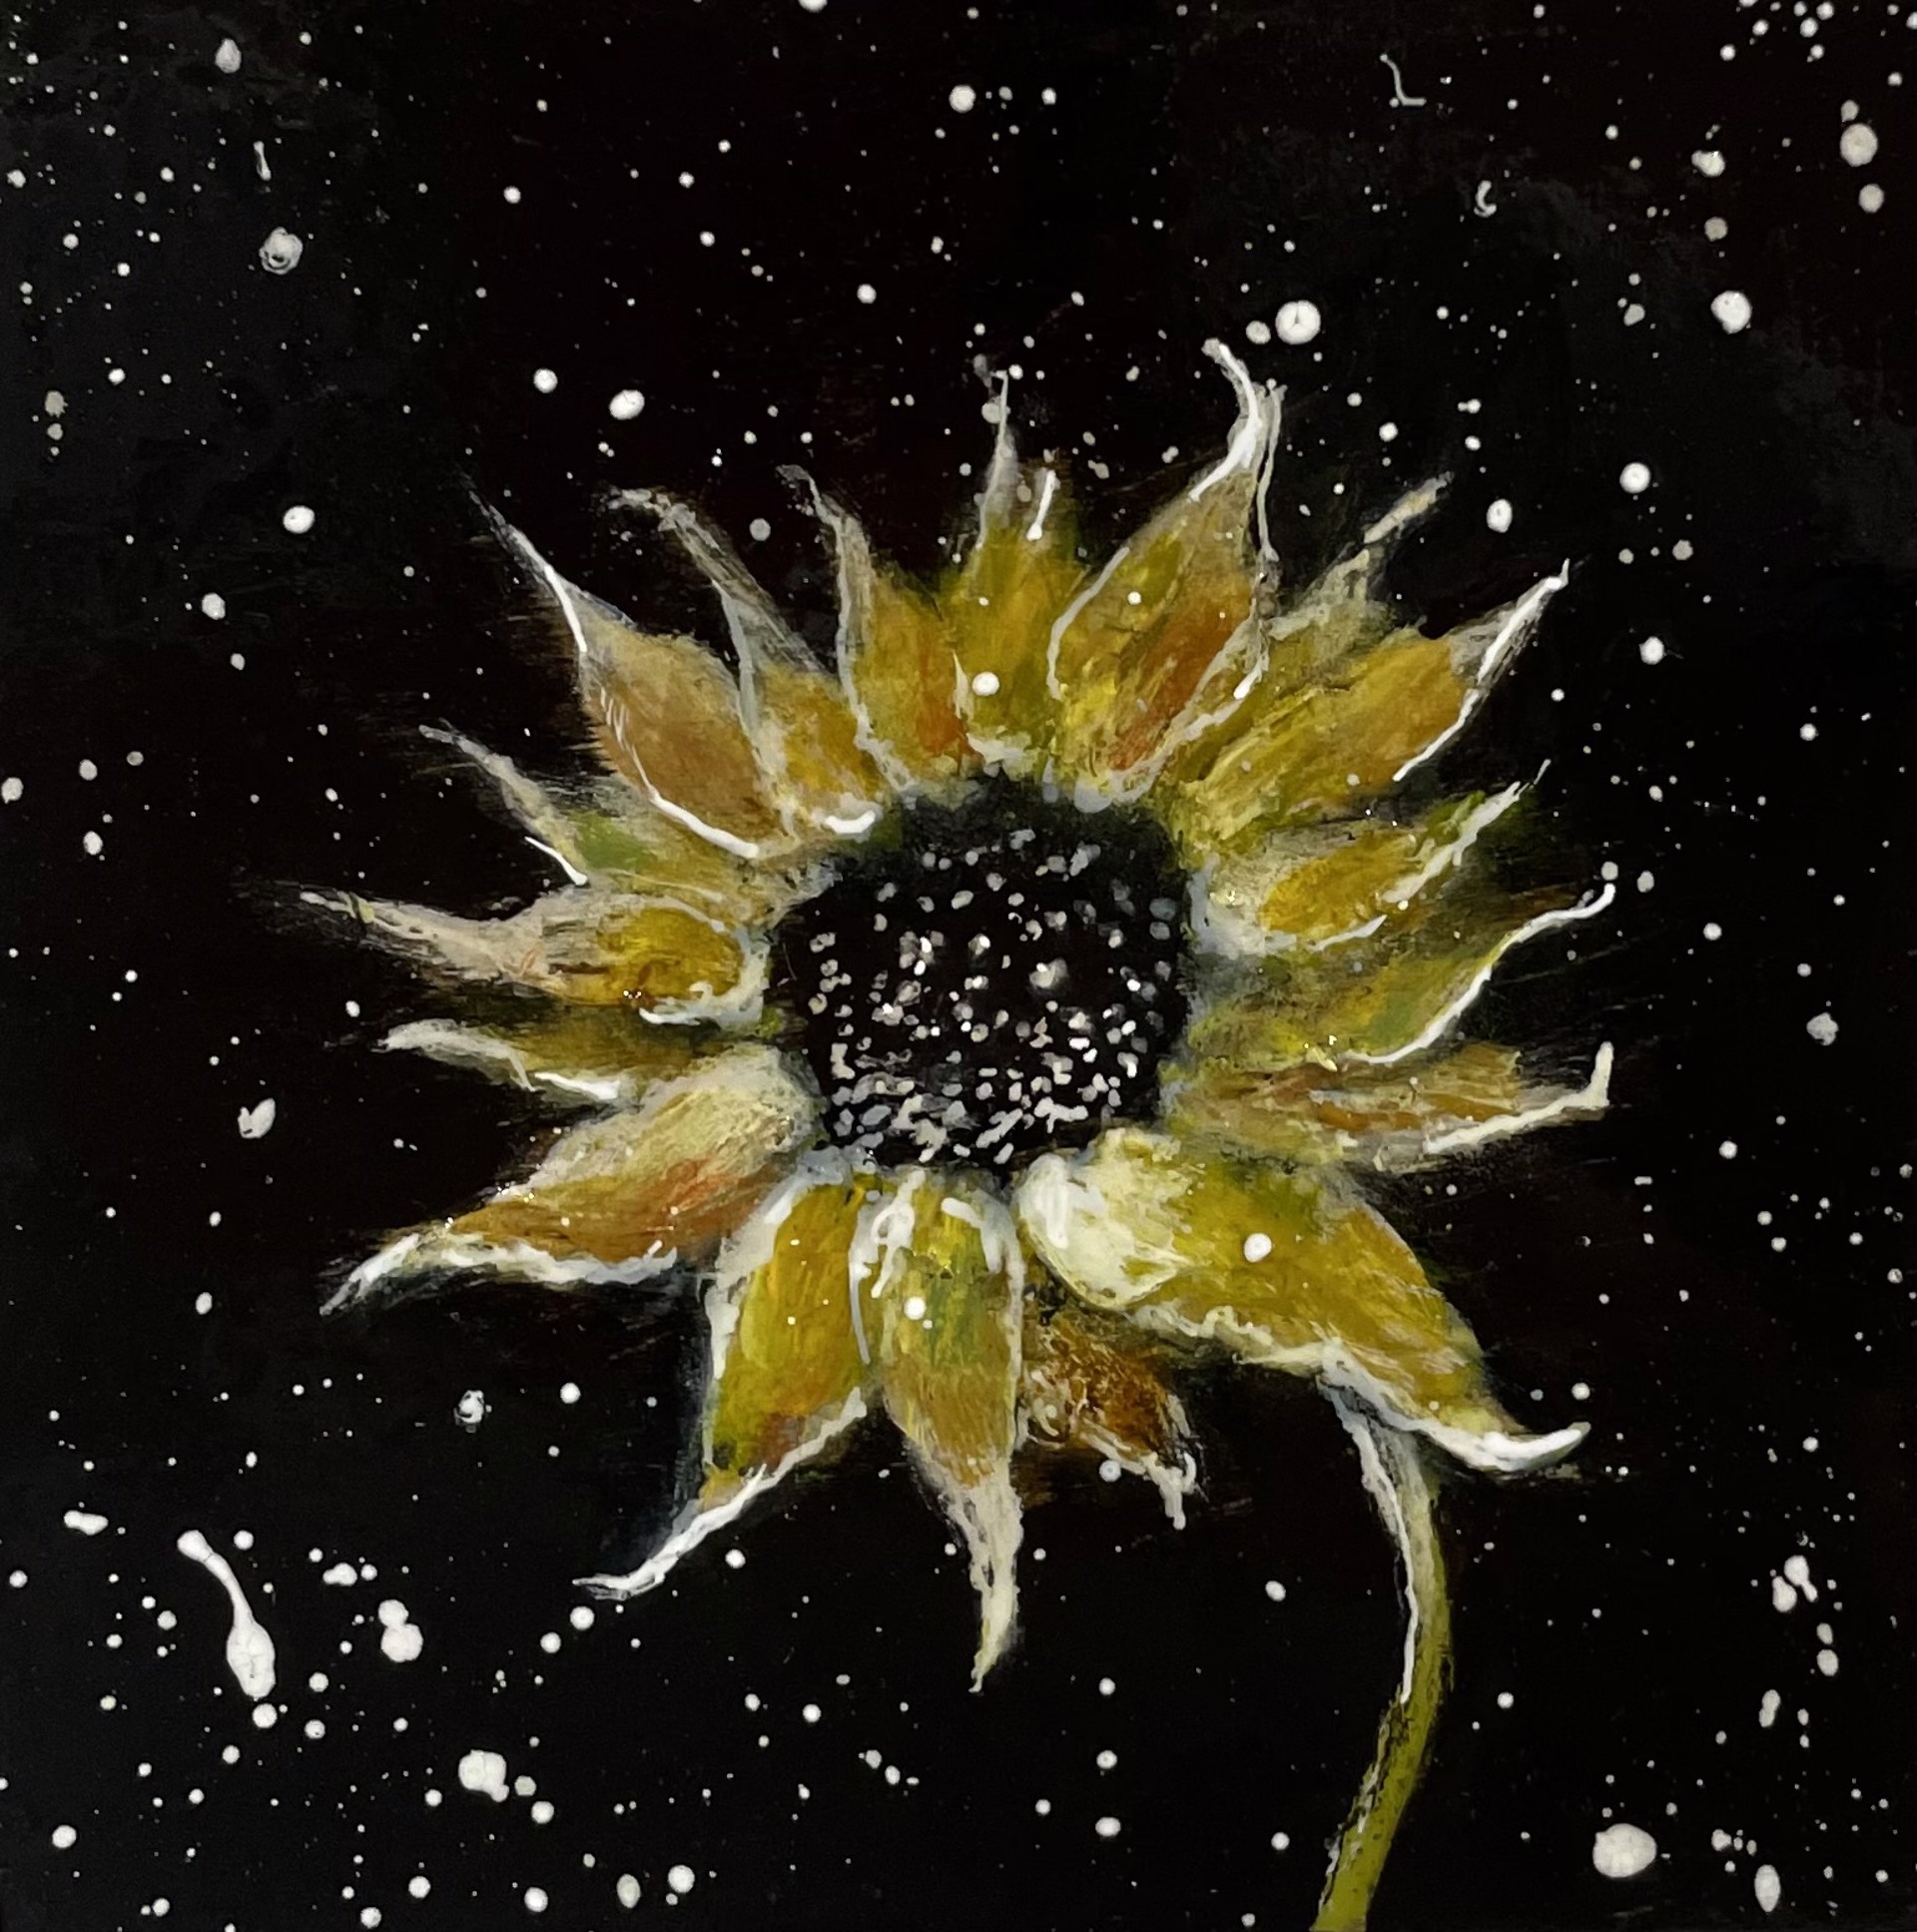 At Night She Blooms by Rachel Gardner